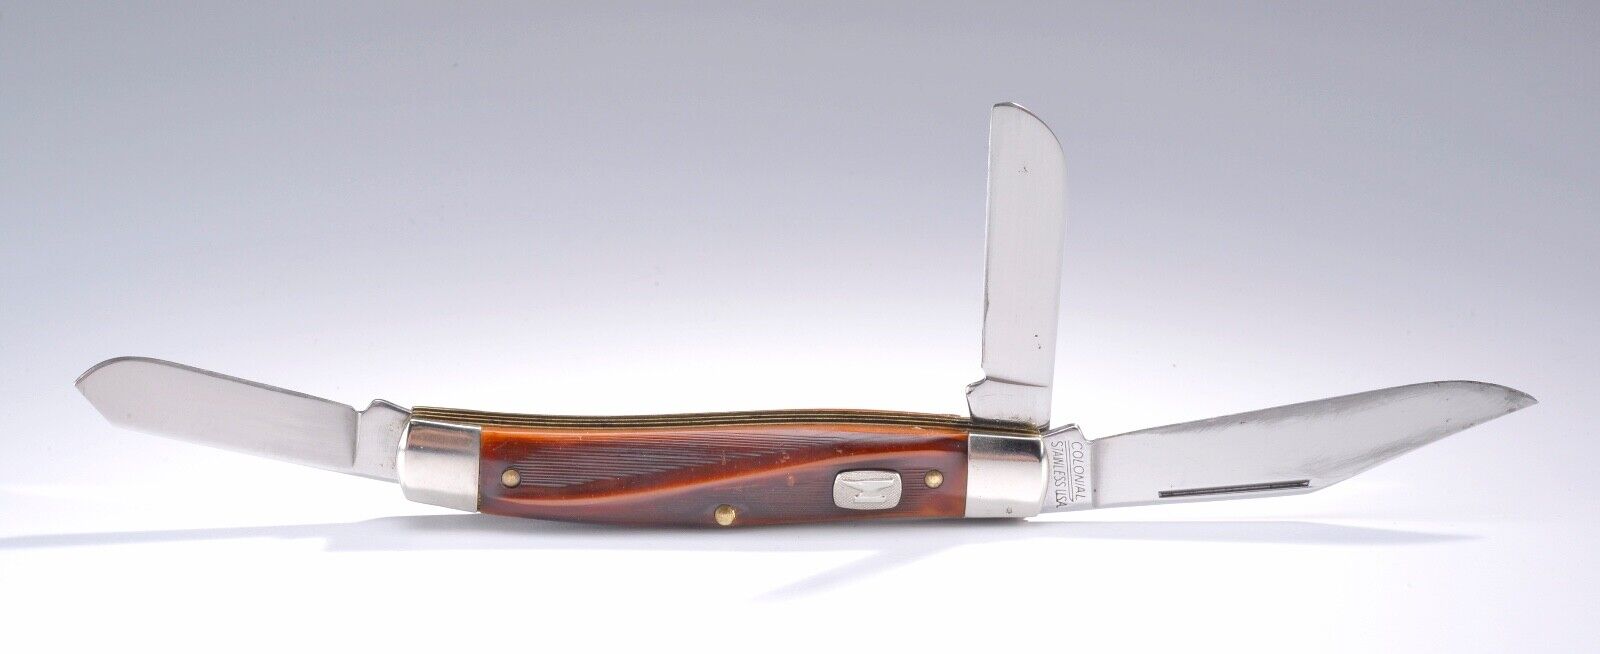 Vintage Blacksmith Anvil - 3 Blade Colonial Pocket Knife Great Snap